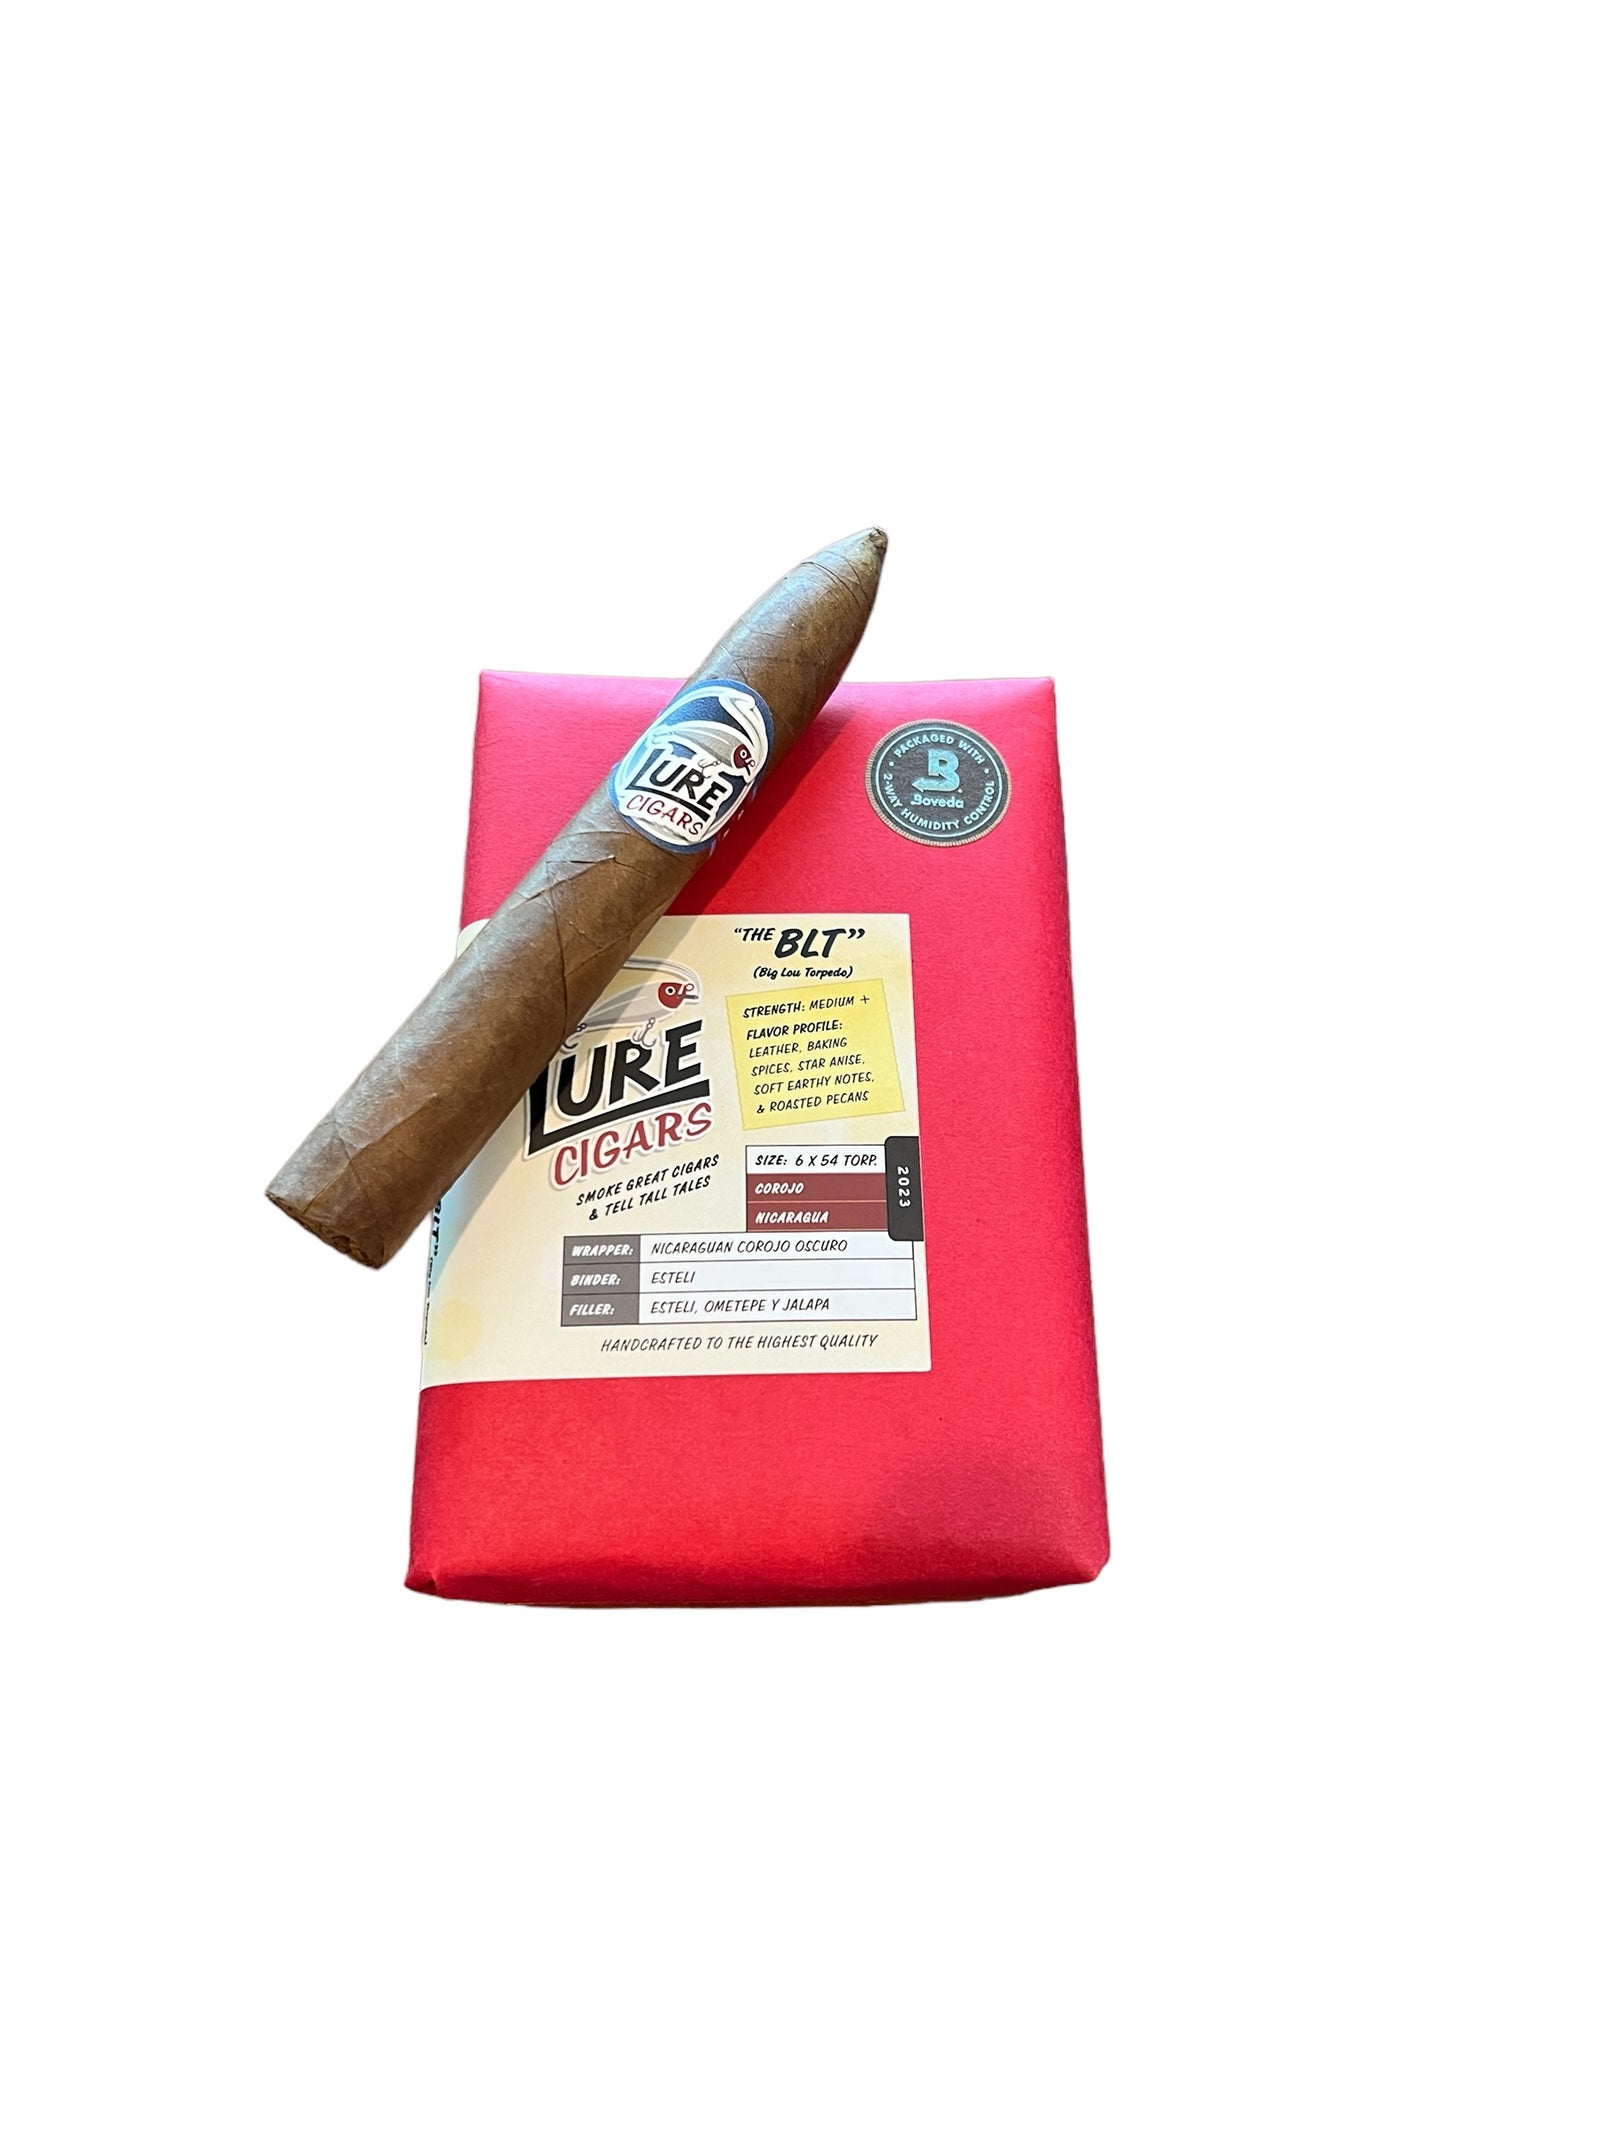 Lure Cigars - The BLT (Big Lou Torpedo)